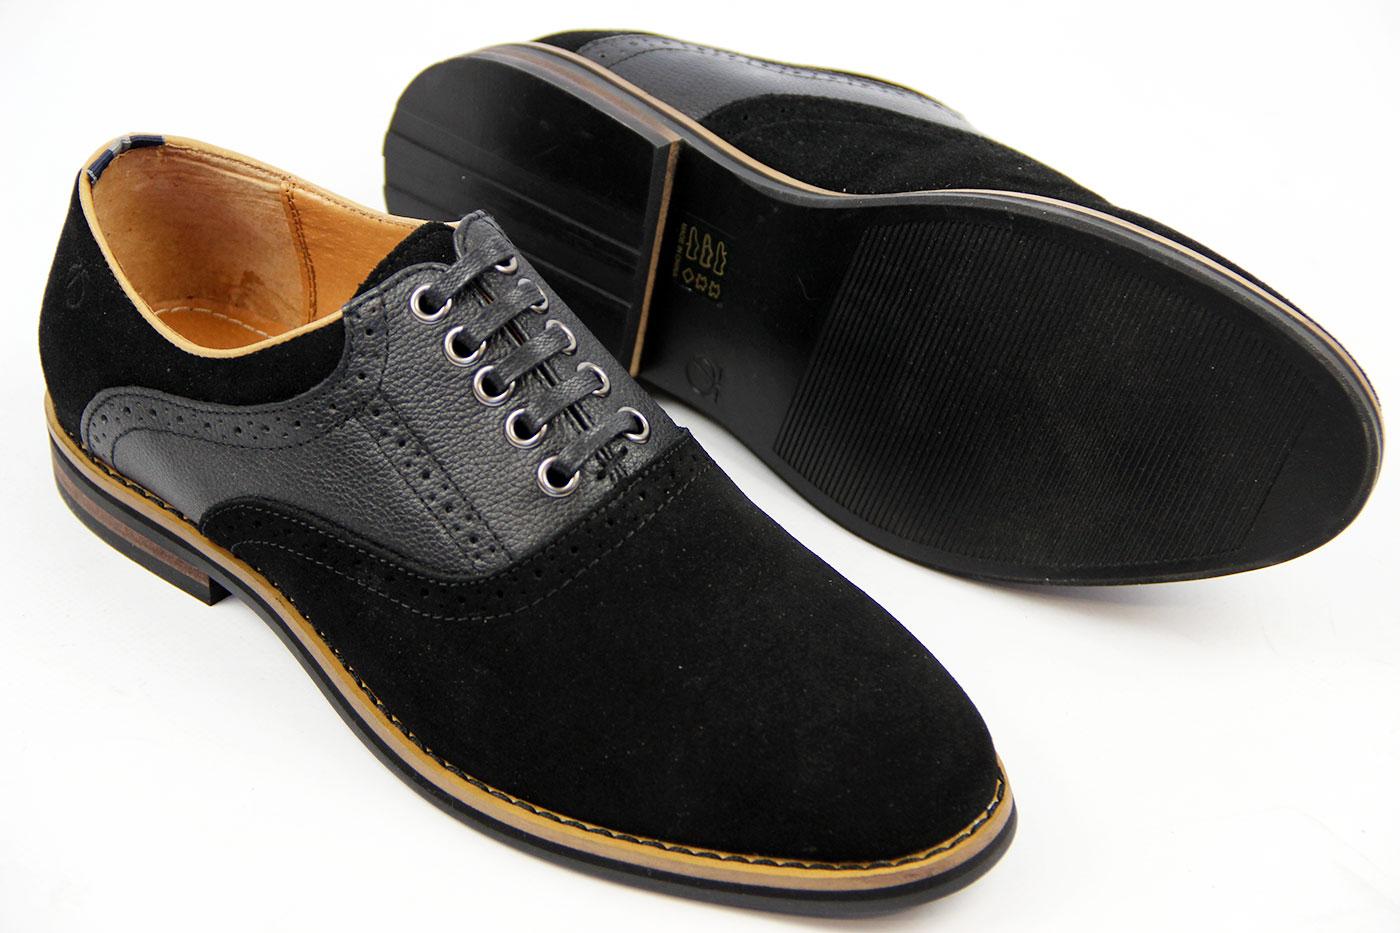 PETER WERTH Nesbitt Retro 60s Mod Saddle Oxford Shoes in Black